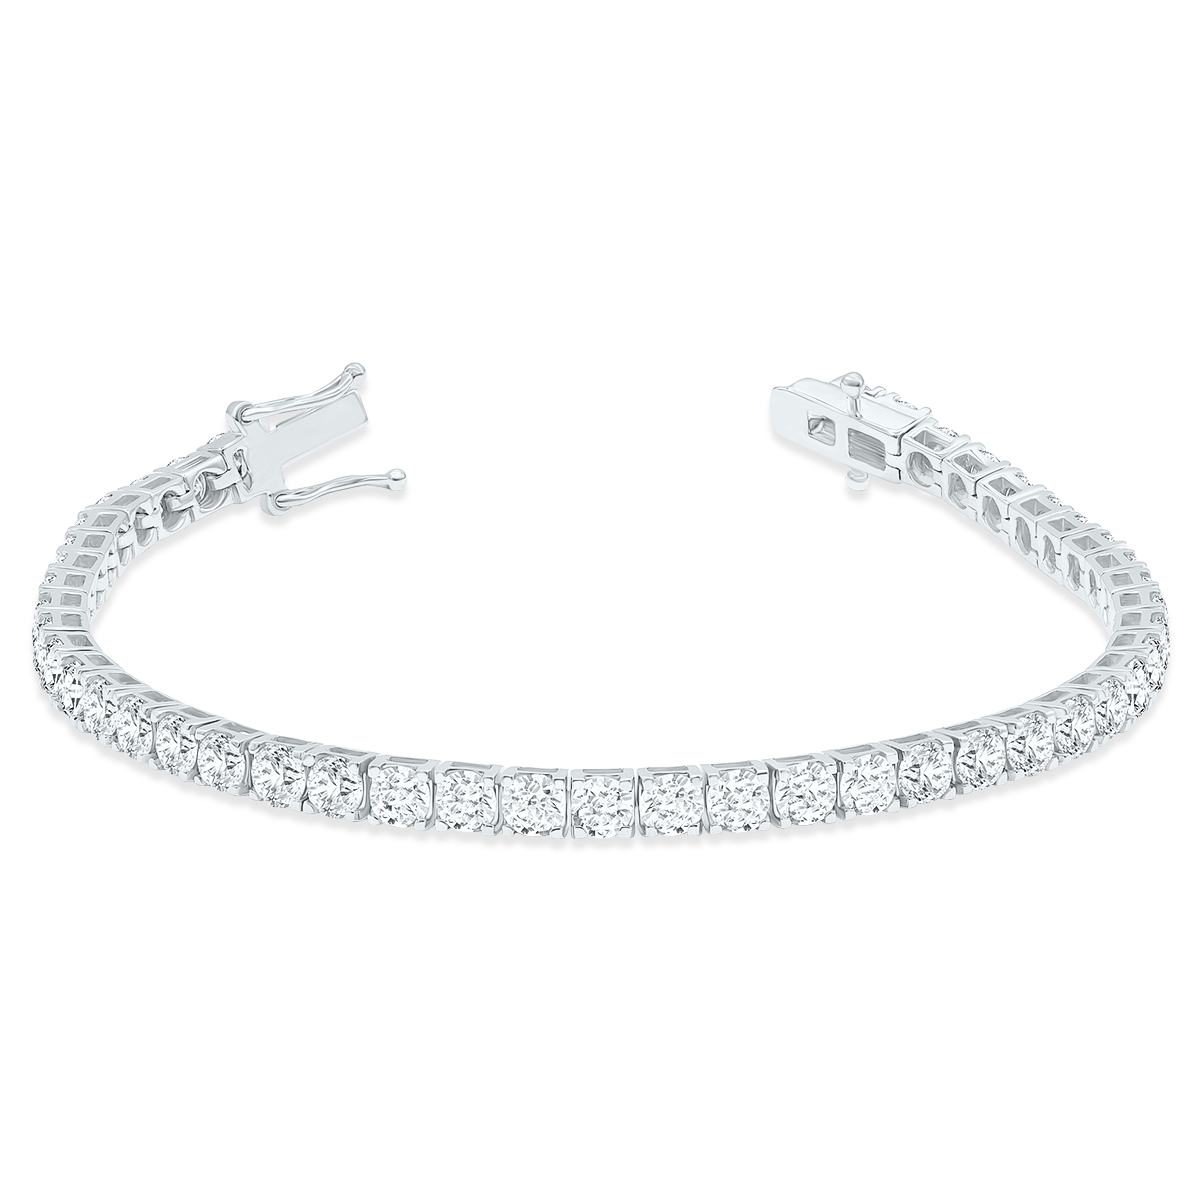 10 Carat TW Diamond Tennis Bracelet in 14K White Gold